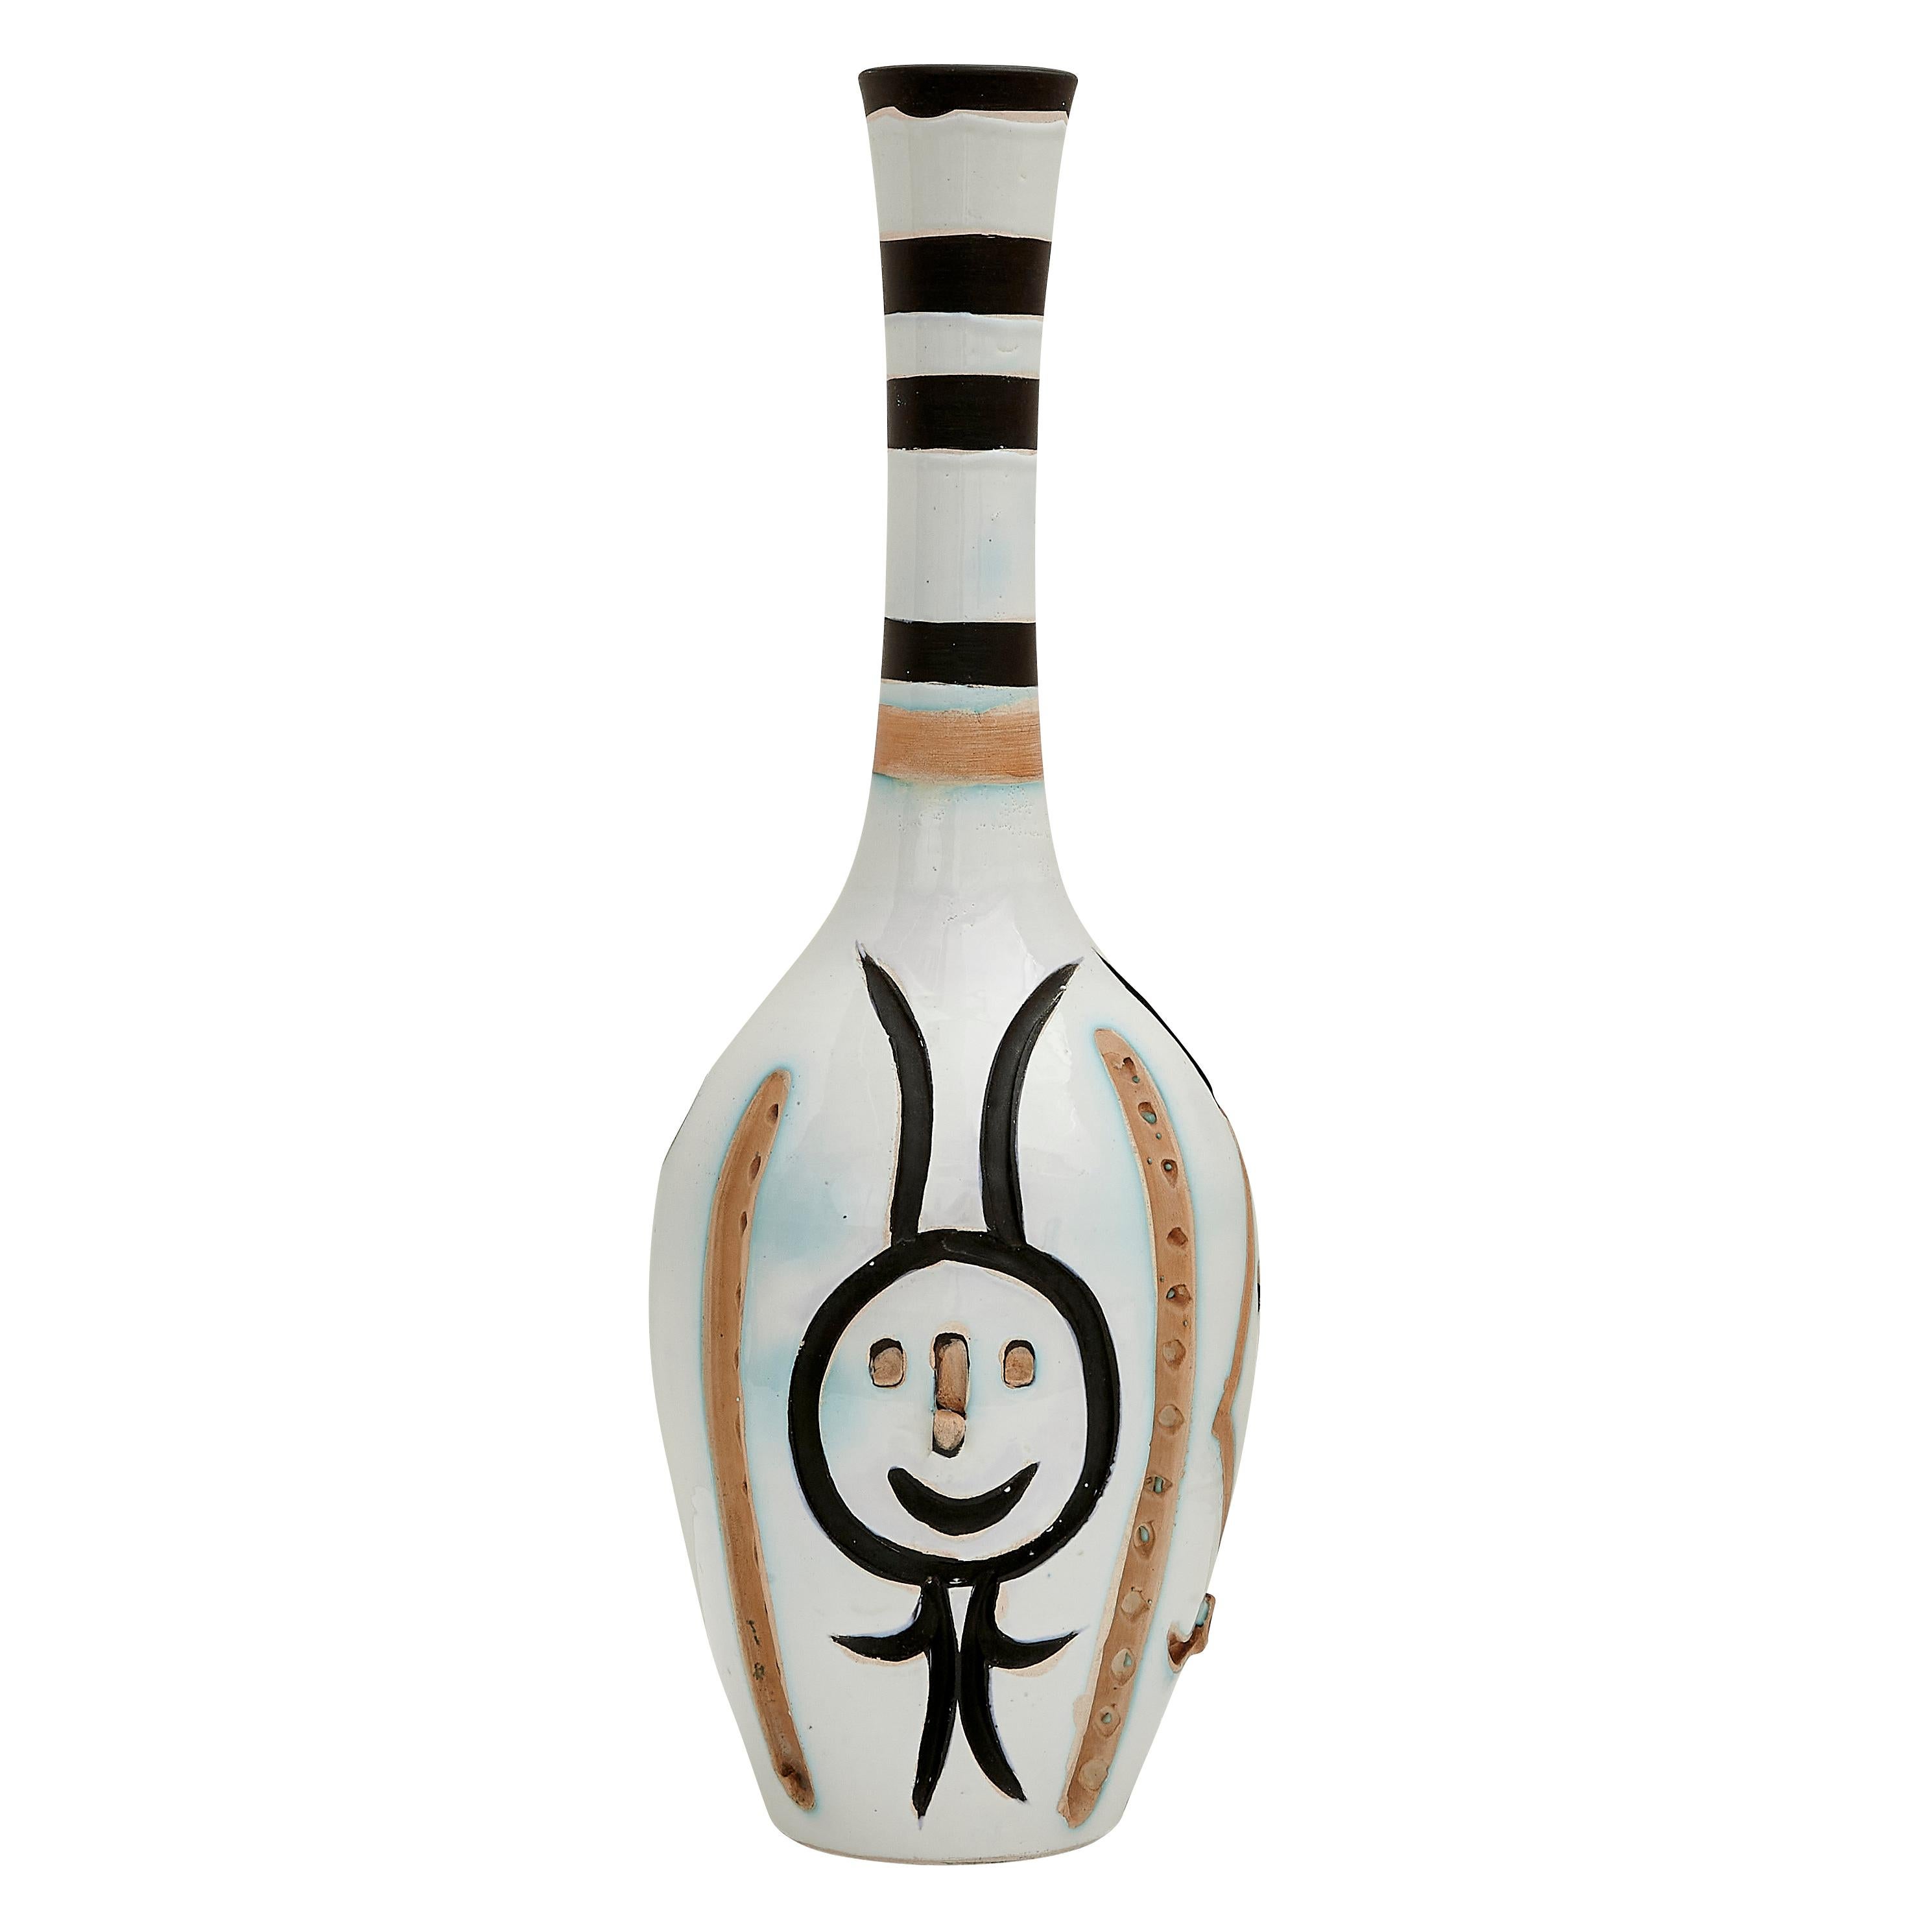 Pablo Picasso 'Bouteille gravée' (A. R. 249) Engraved Bottle Madoura Vase 1954 For Sale 2